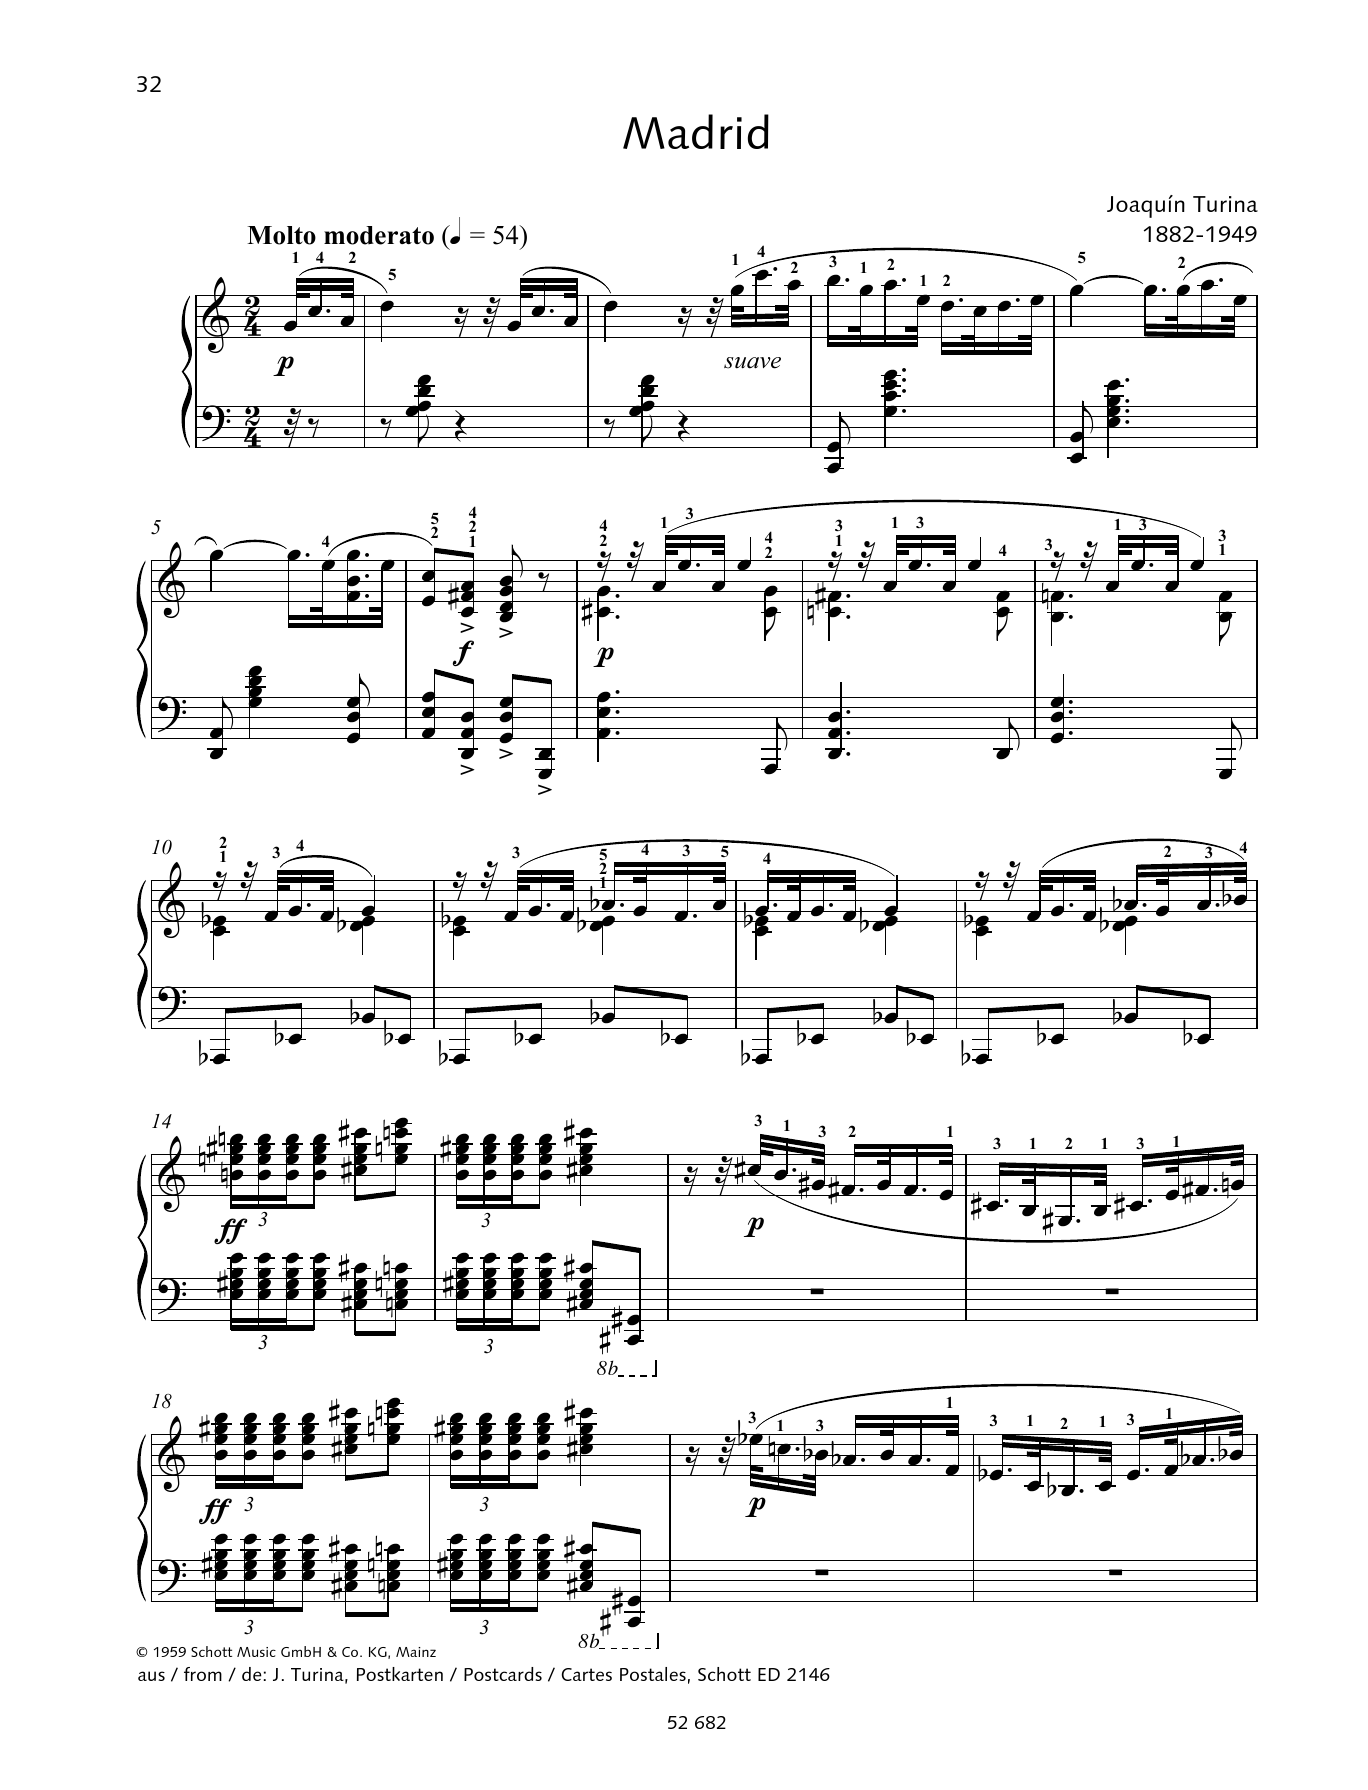 Joaquín Turina Madrid Sheet Music Notes & Chords for Piano Solo - Download or Print PDF